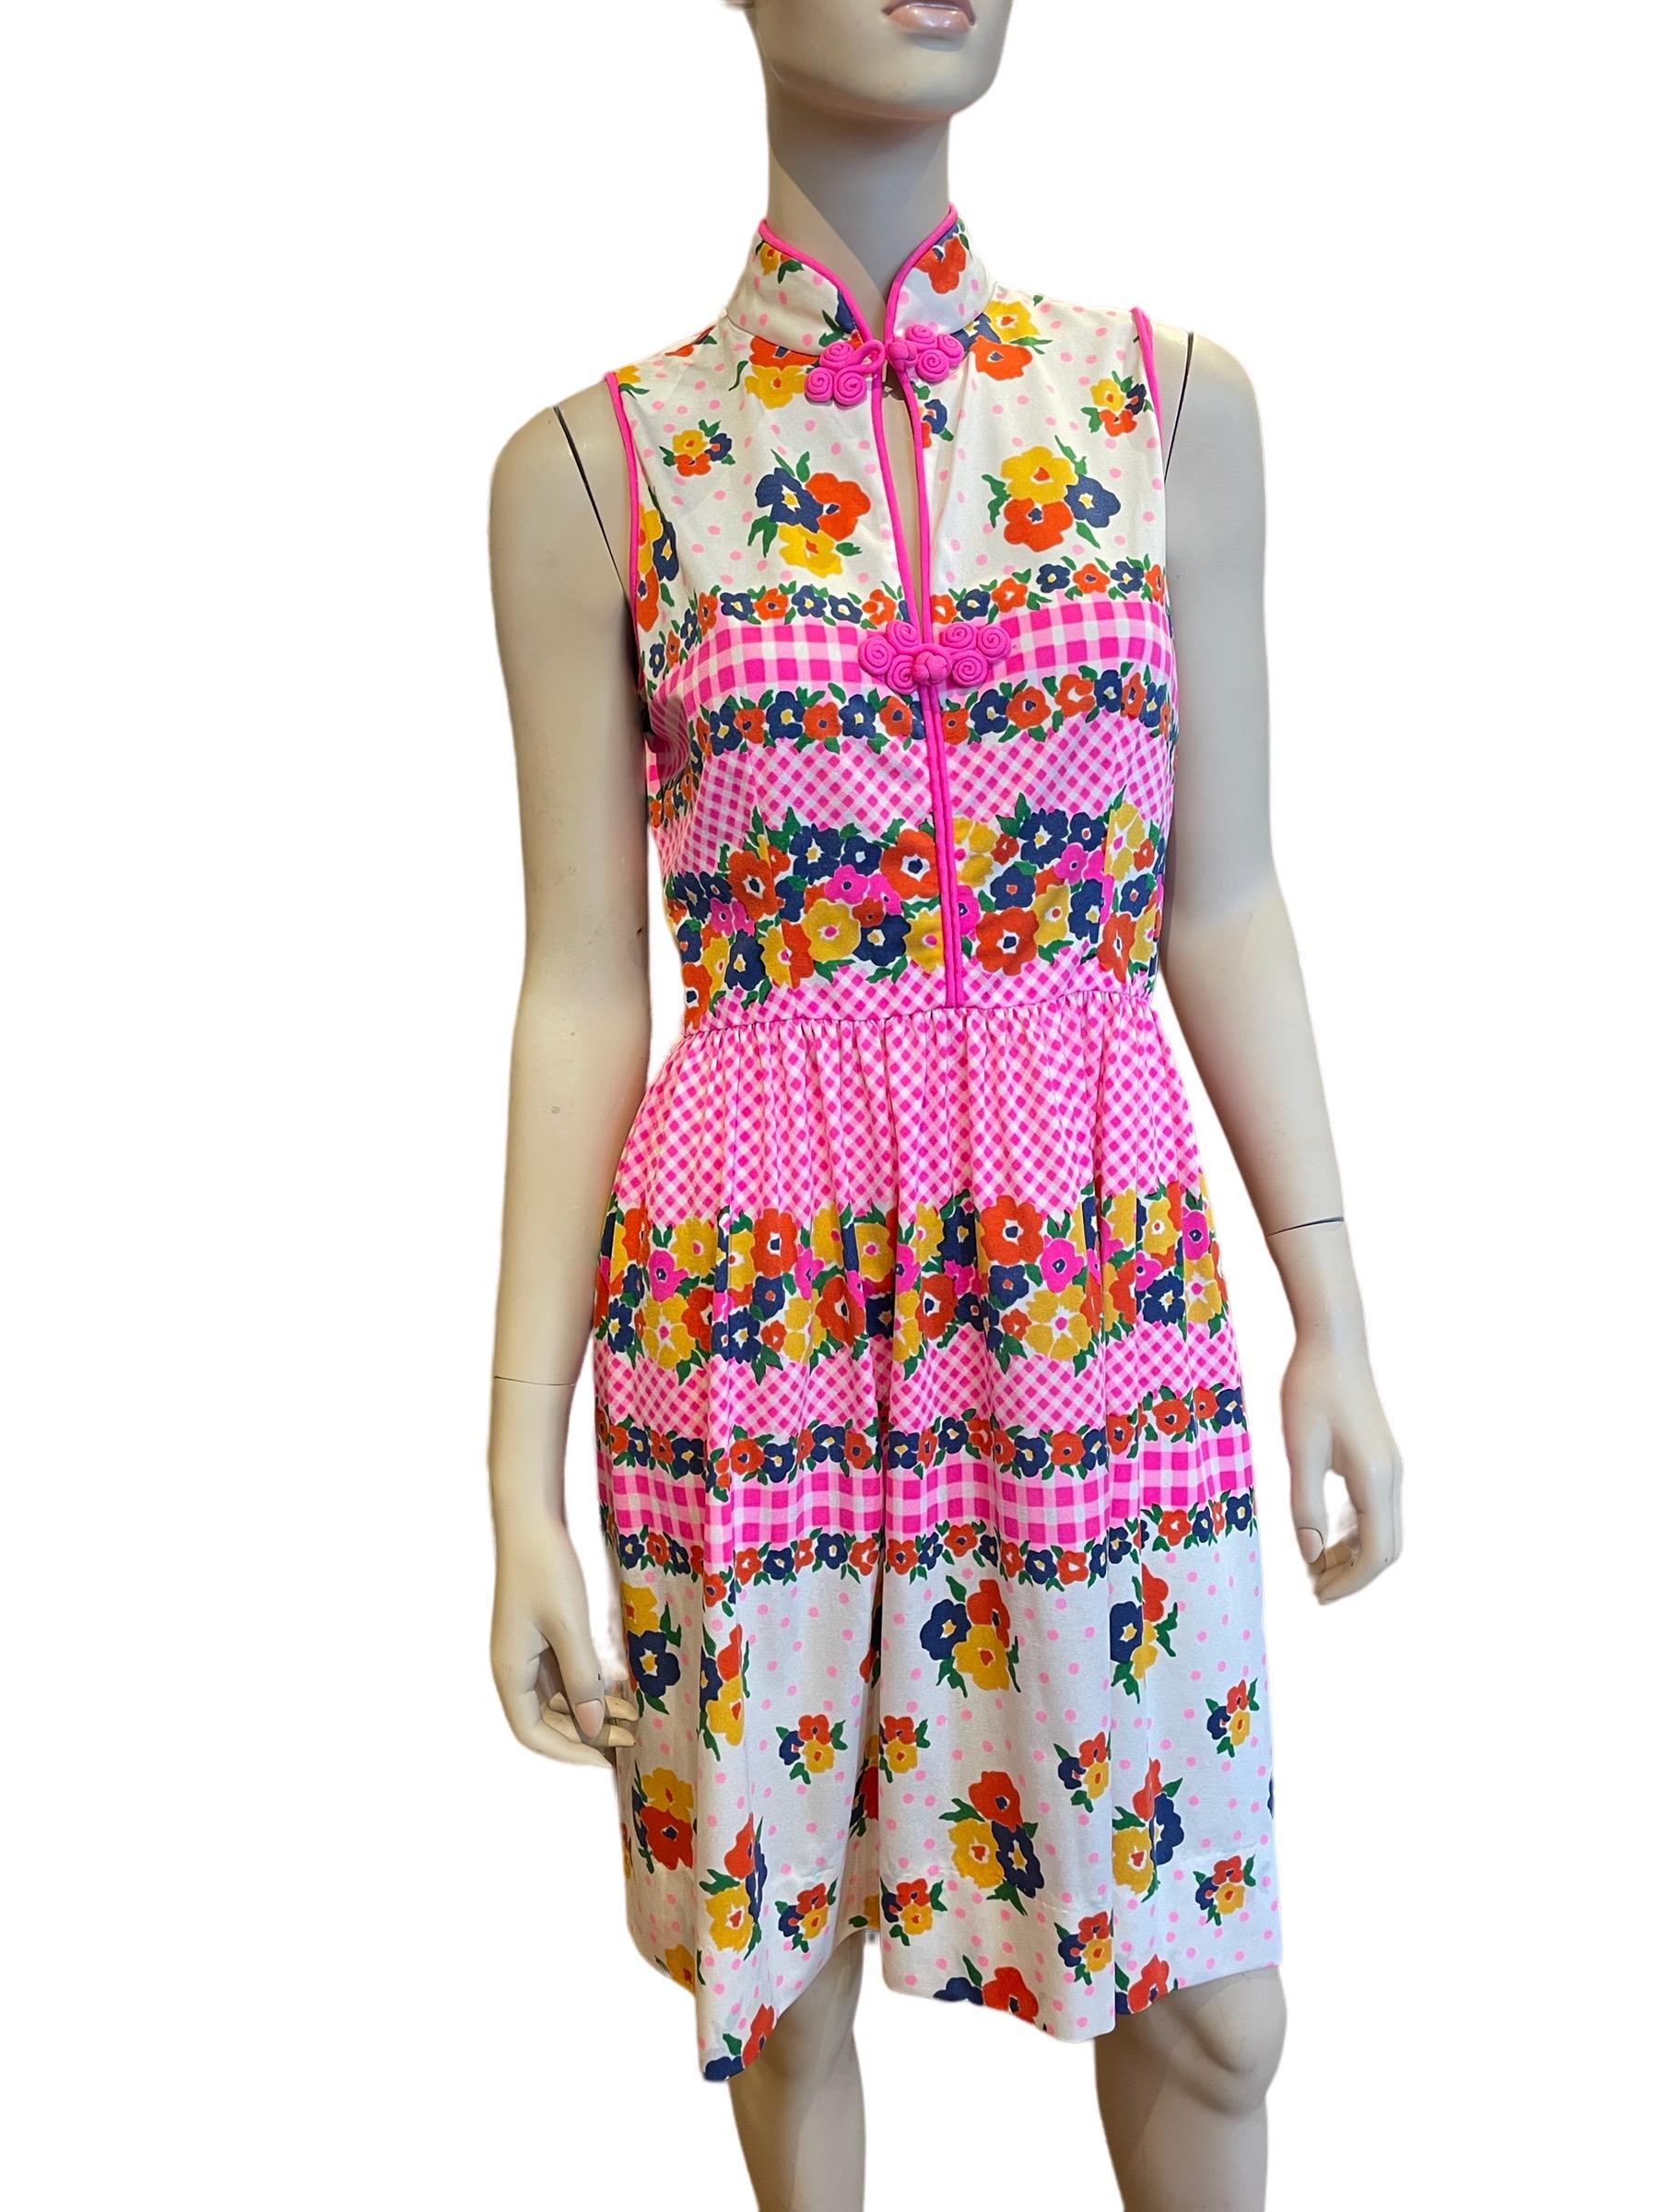 1960er Oscar De La Renta Hot Pink Floral Mandarin Style Sleeveless Dress - Rare Designer Vintage Stück!

Büste: 36